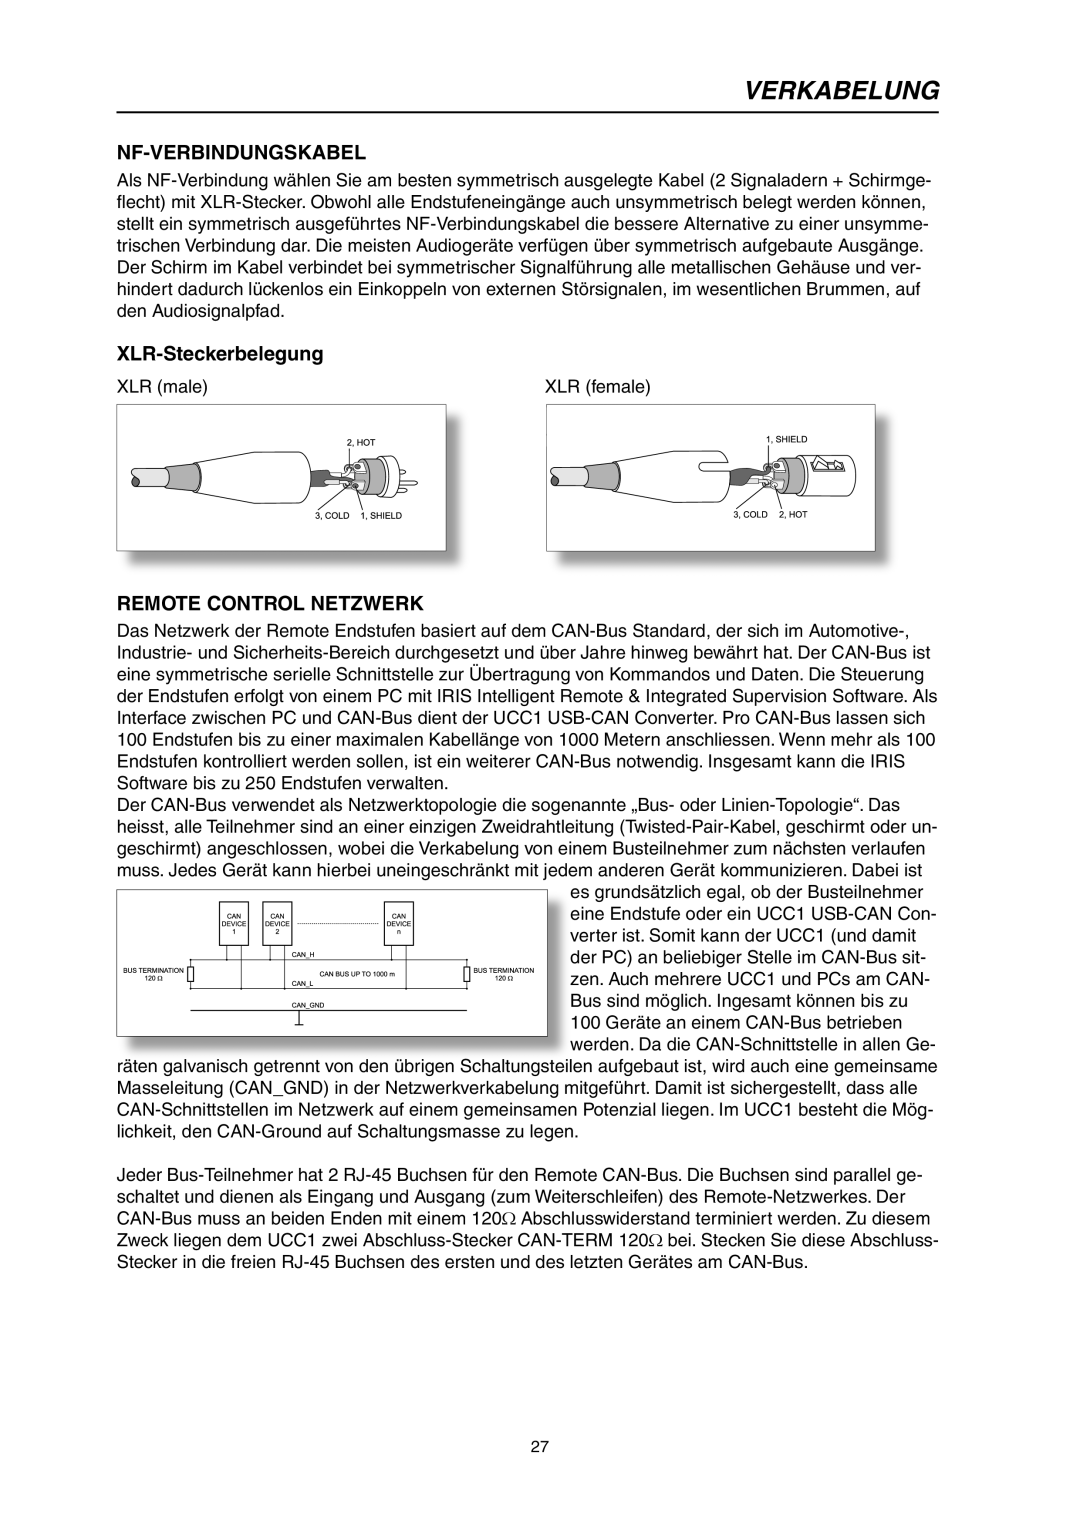 Electro-Voice P3000RL owner manual Verkabelung, Nf-Verbindungskabel, XLR-Steckerbelegung, Remote Control Netzwerk 